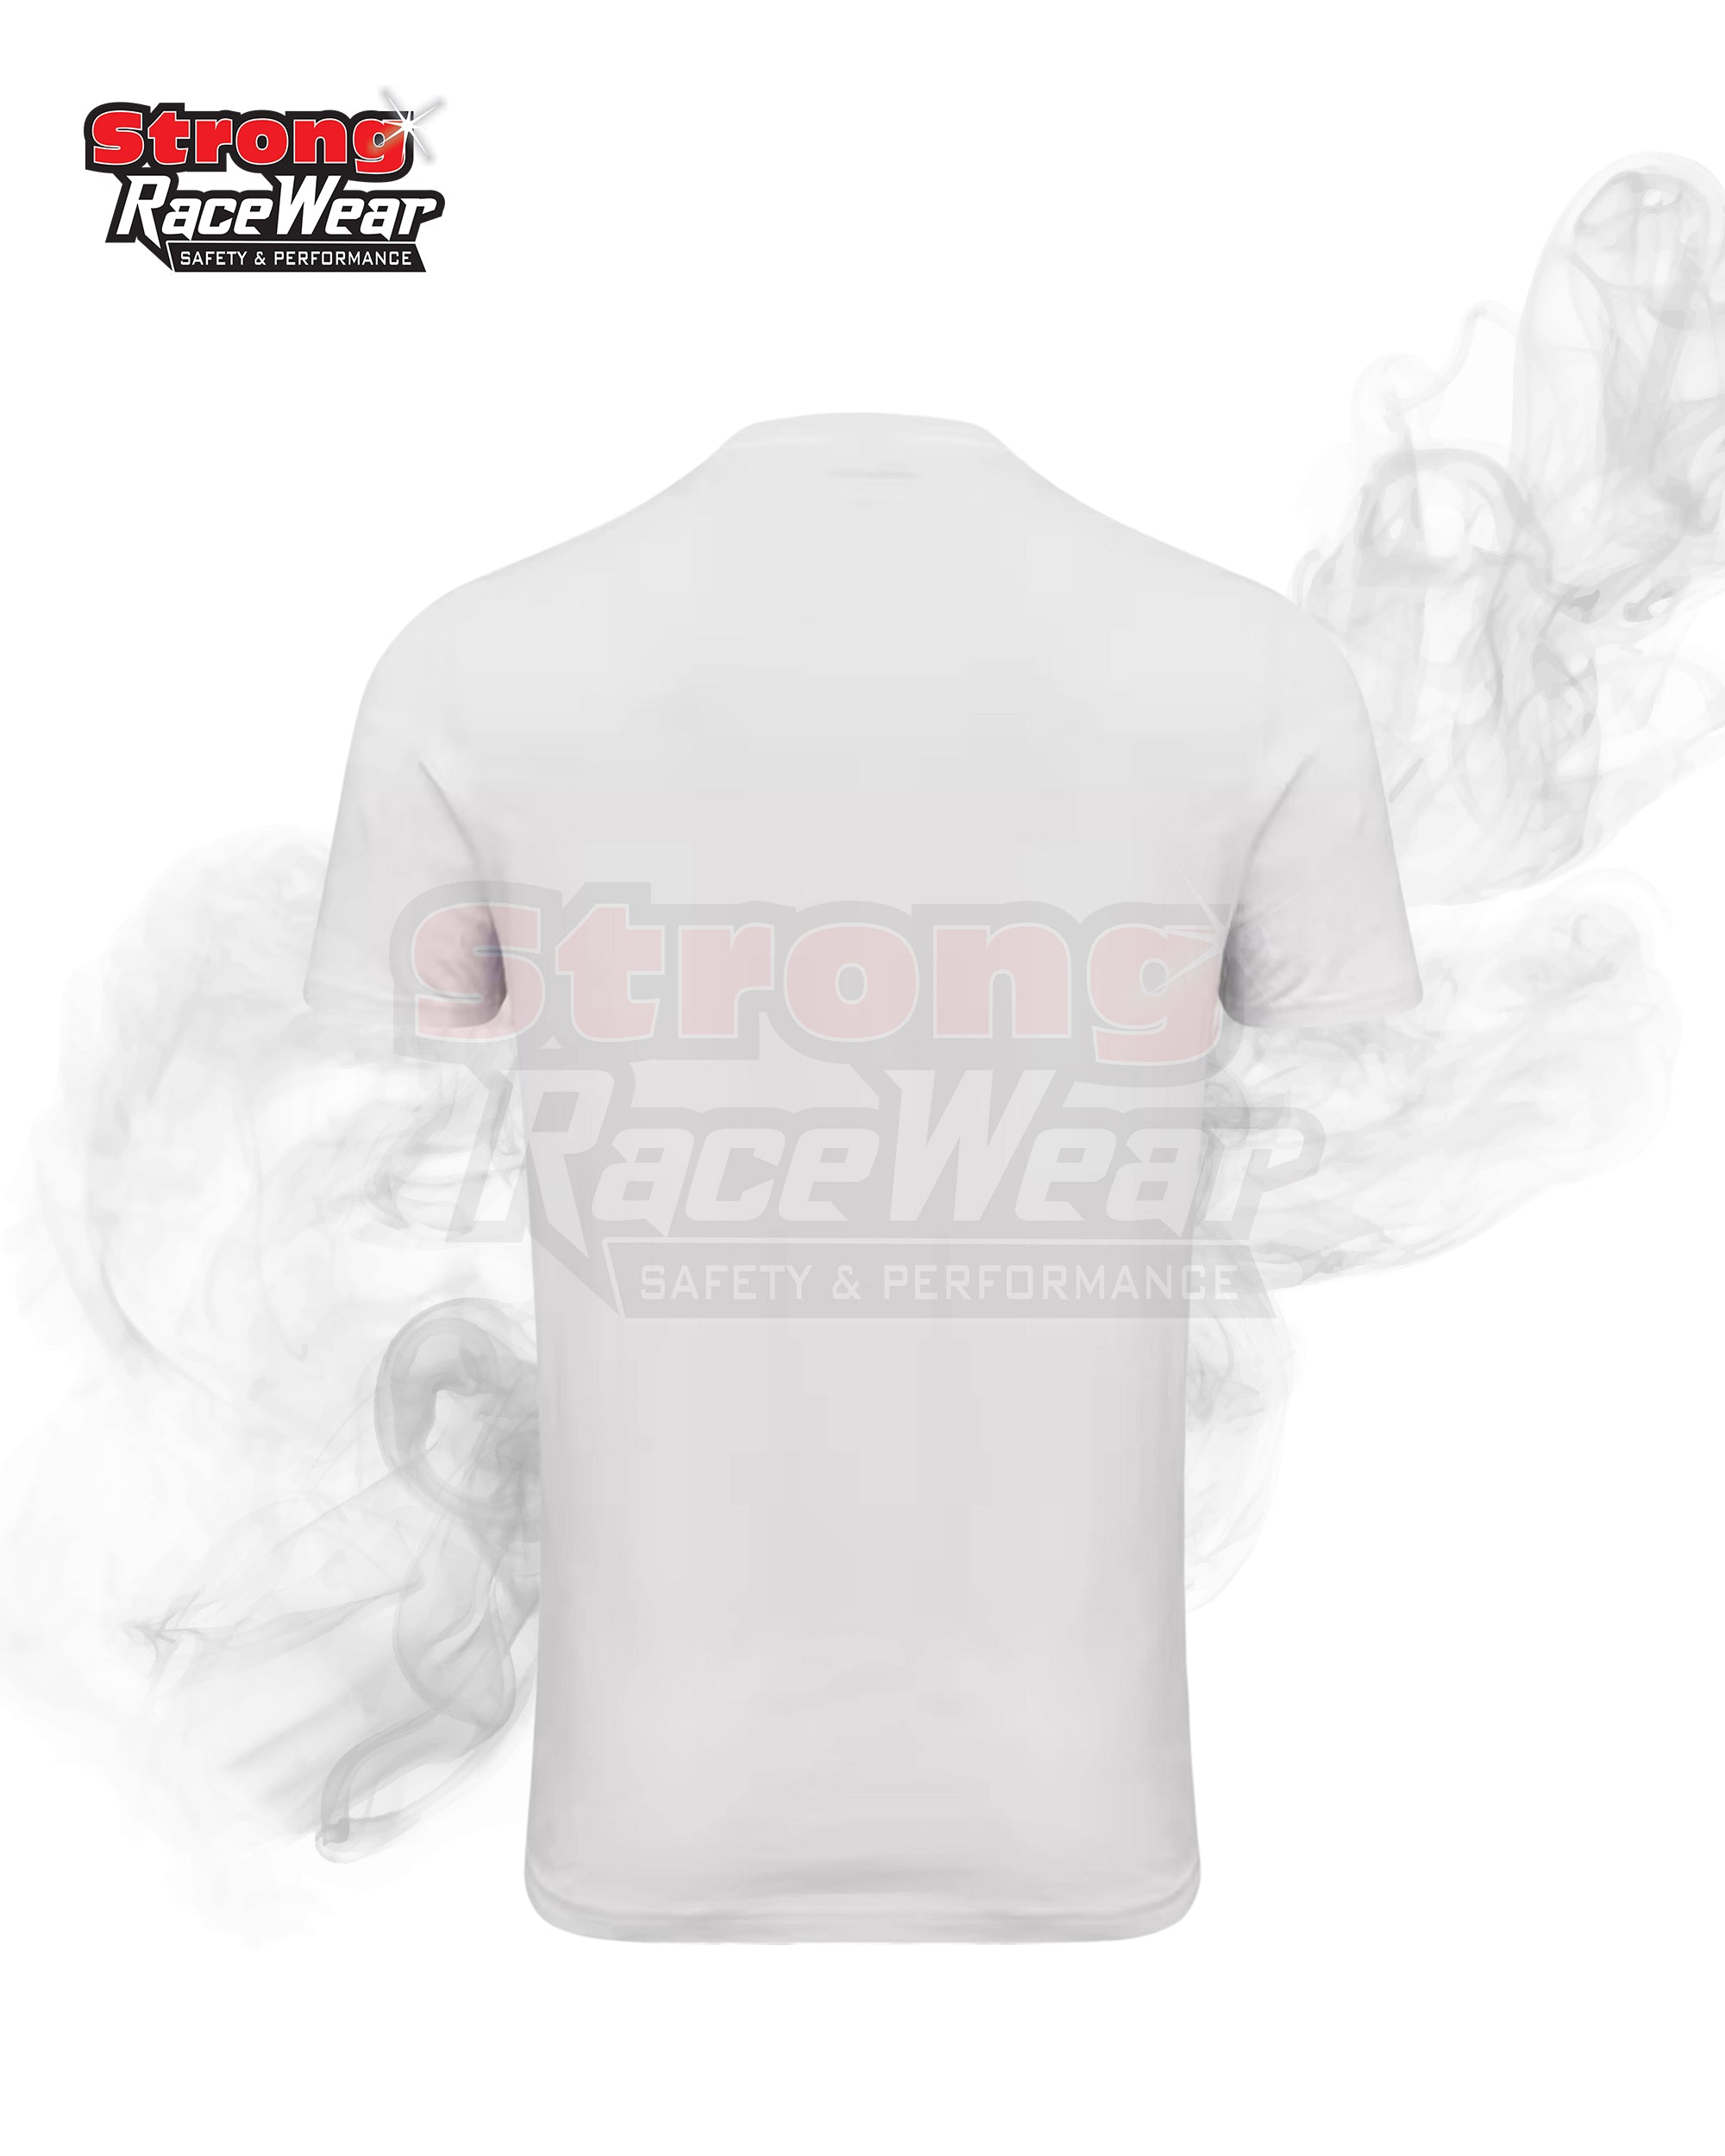 McLaren Essentials T-Shirt